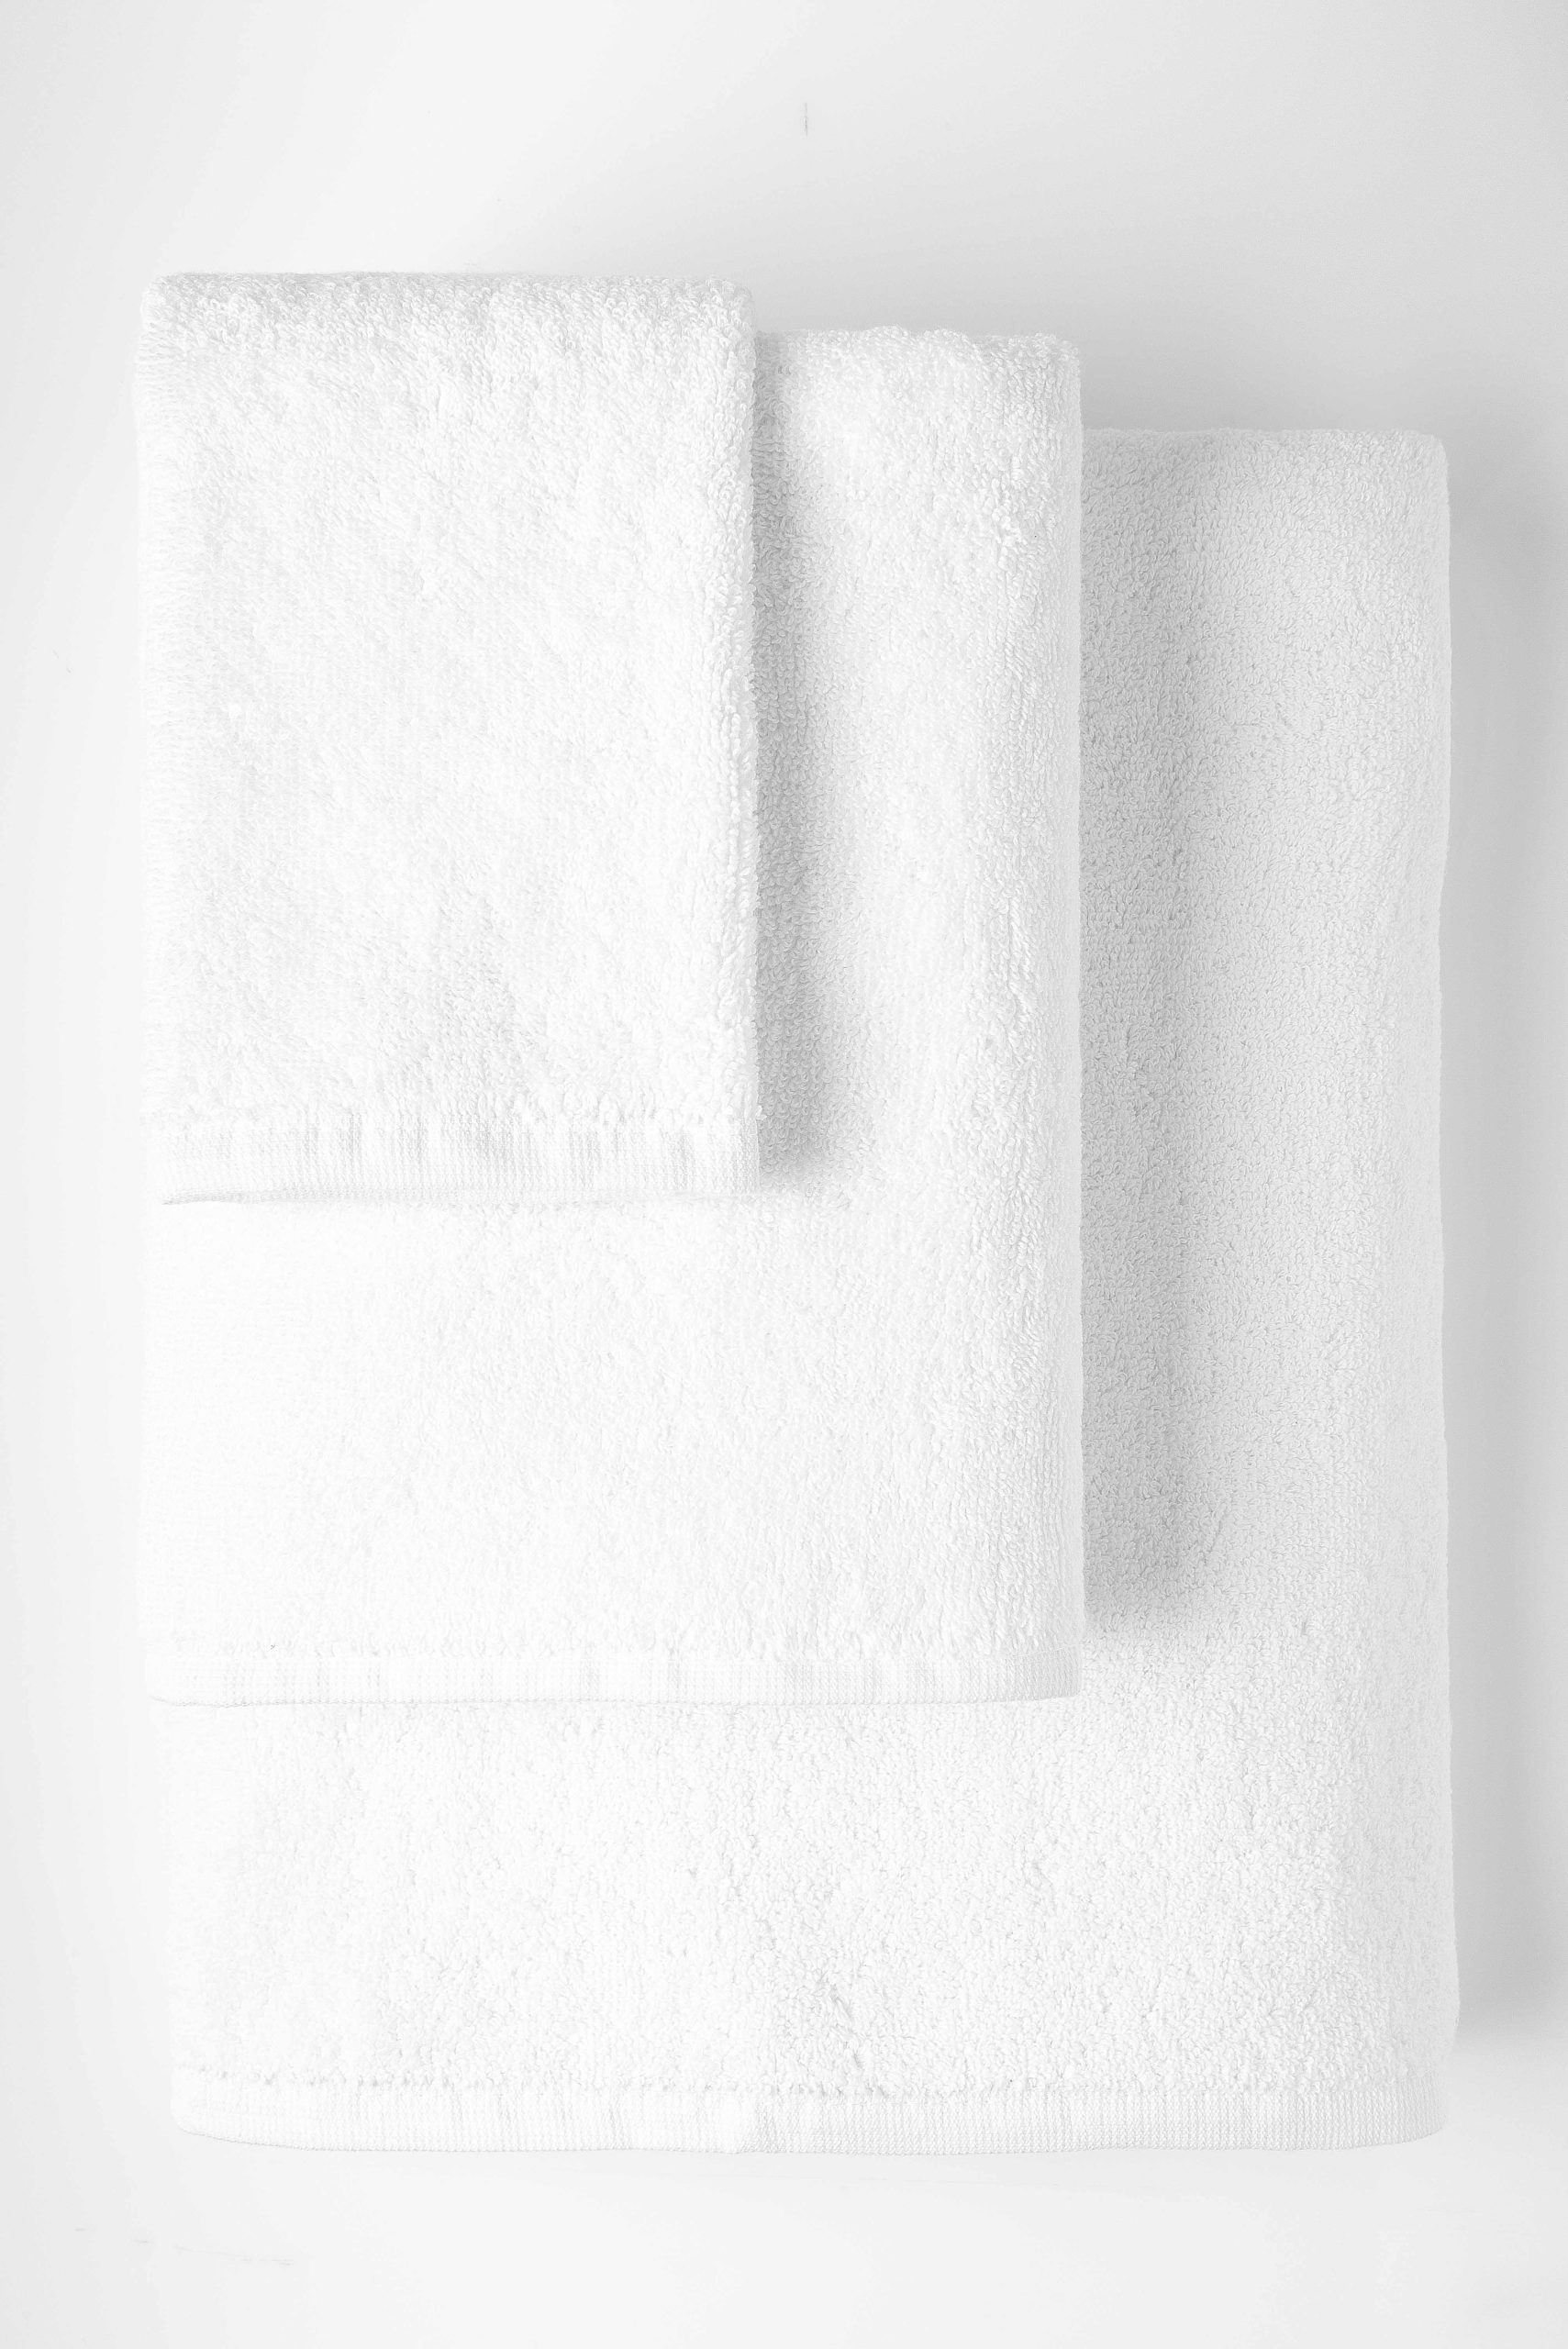 AD hotelska oprema Hotelski ručnik za tijelo plain 70x140 (2 komada) product image